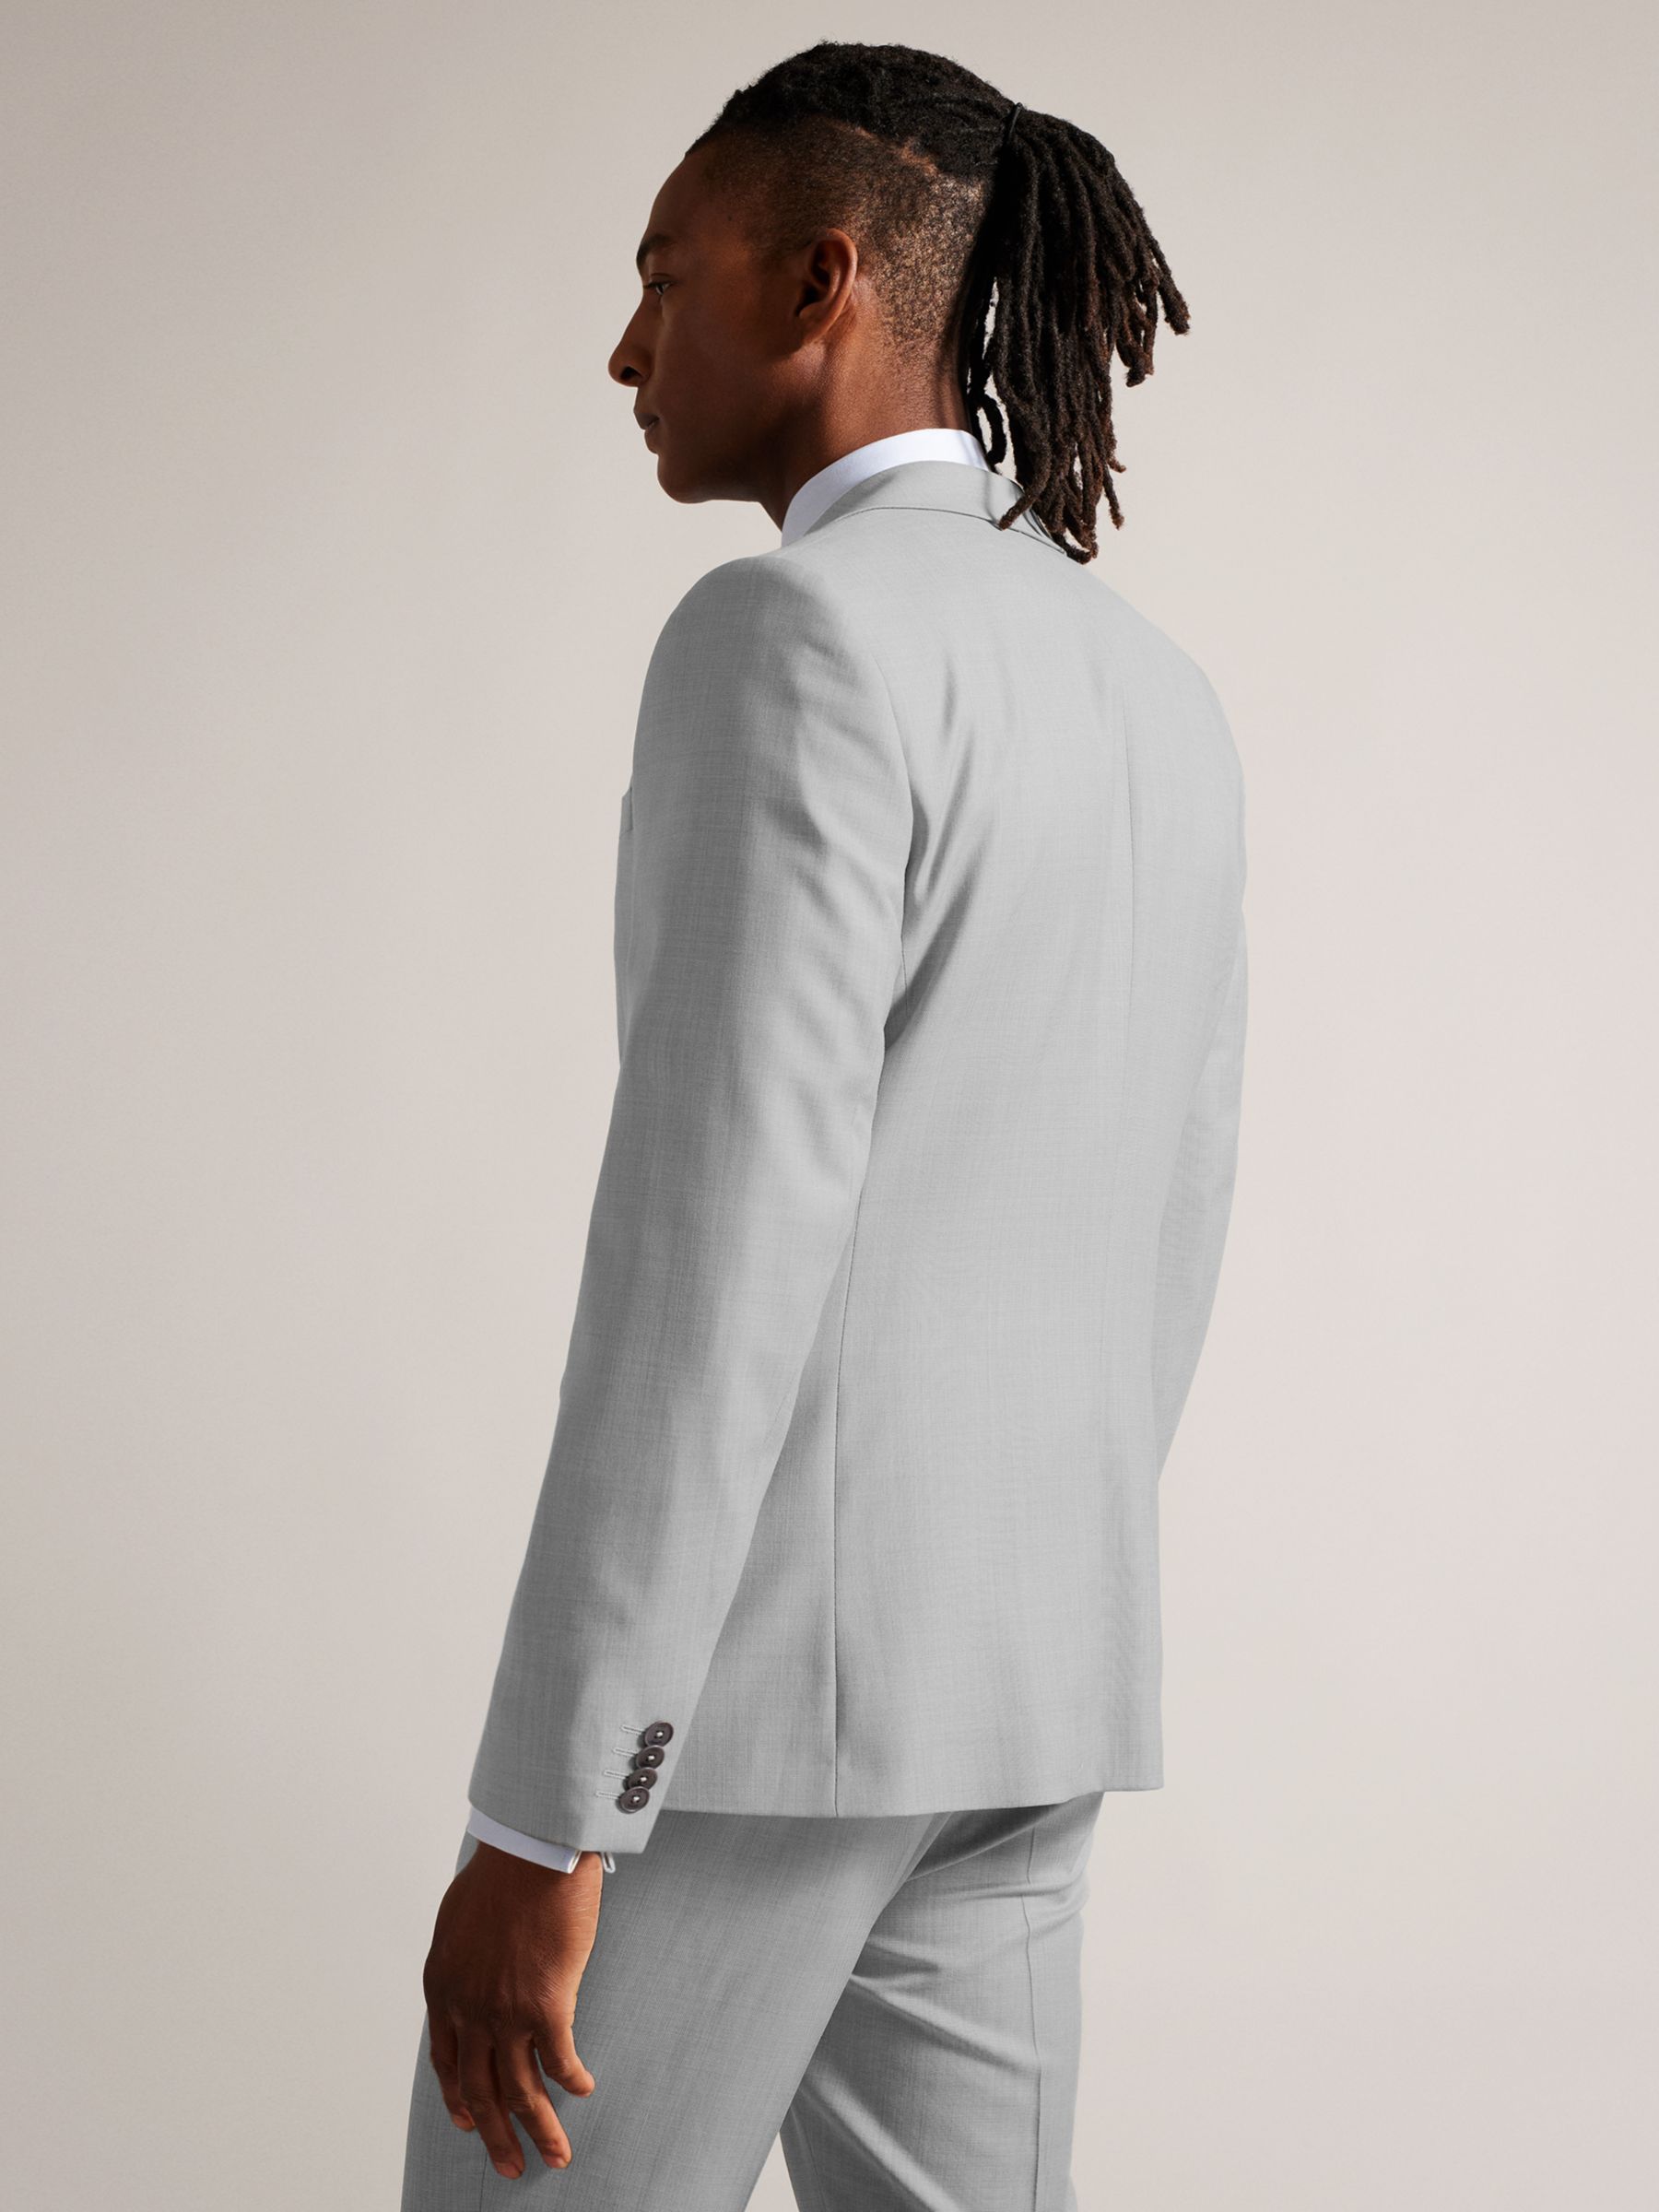 Buy Ted Baker Byron Slim Fit Wool Suit Jacket, Light Grey Online at johnlewis.com